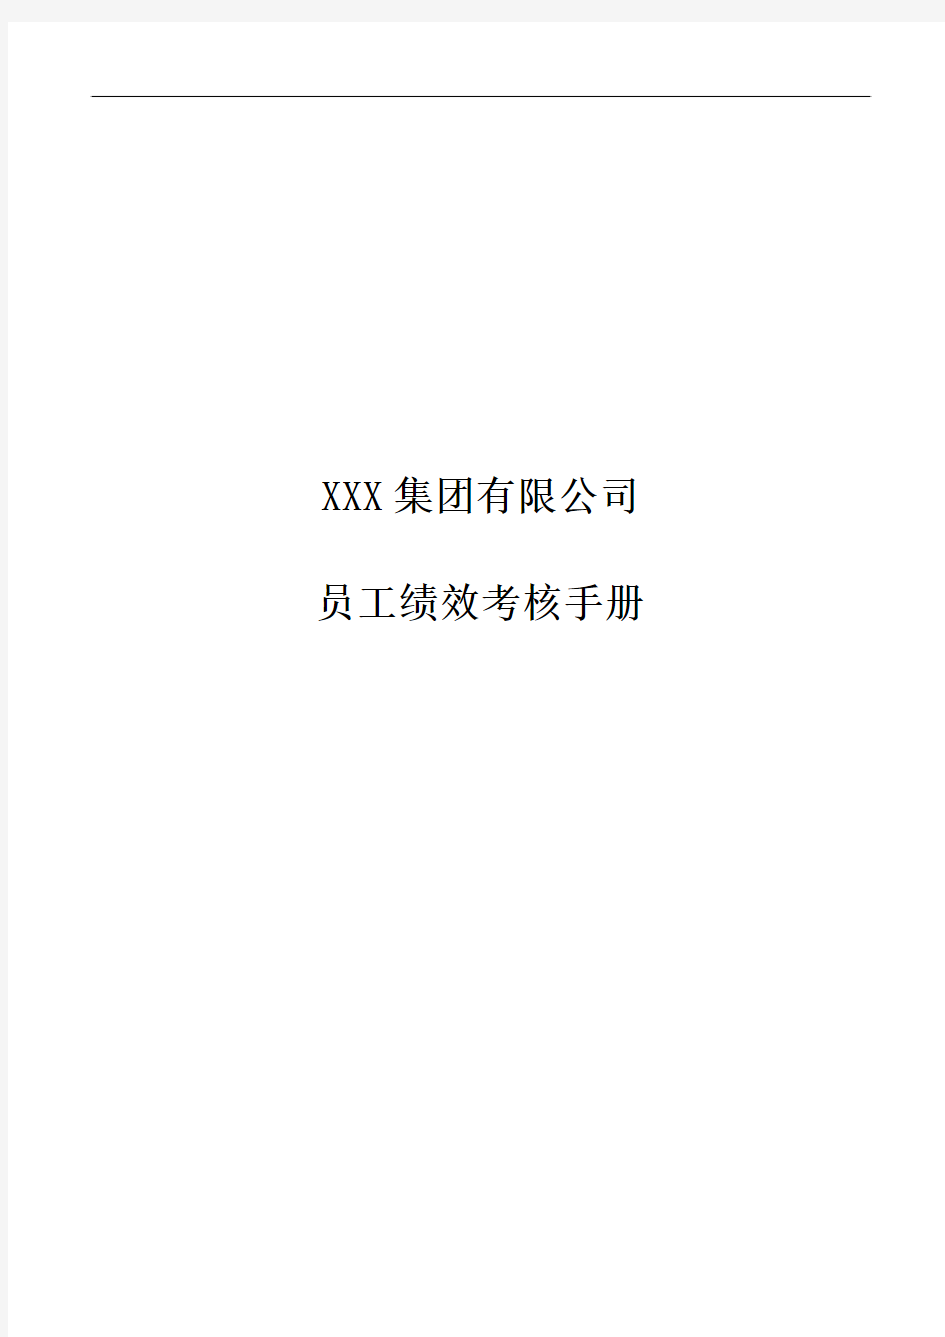 XXX集团有限公司员工绩效考核手册